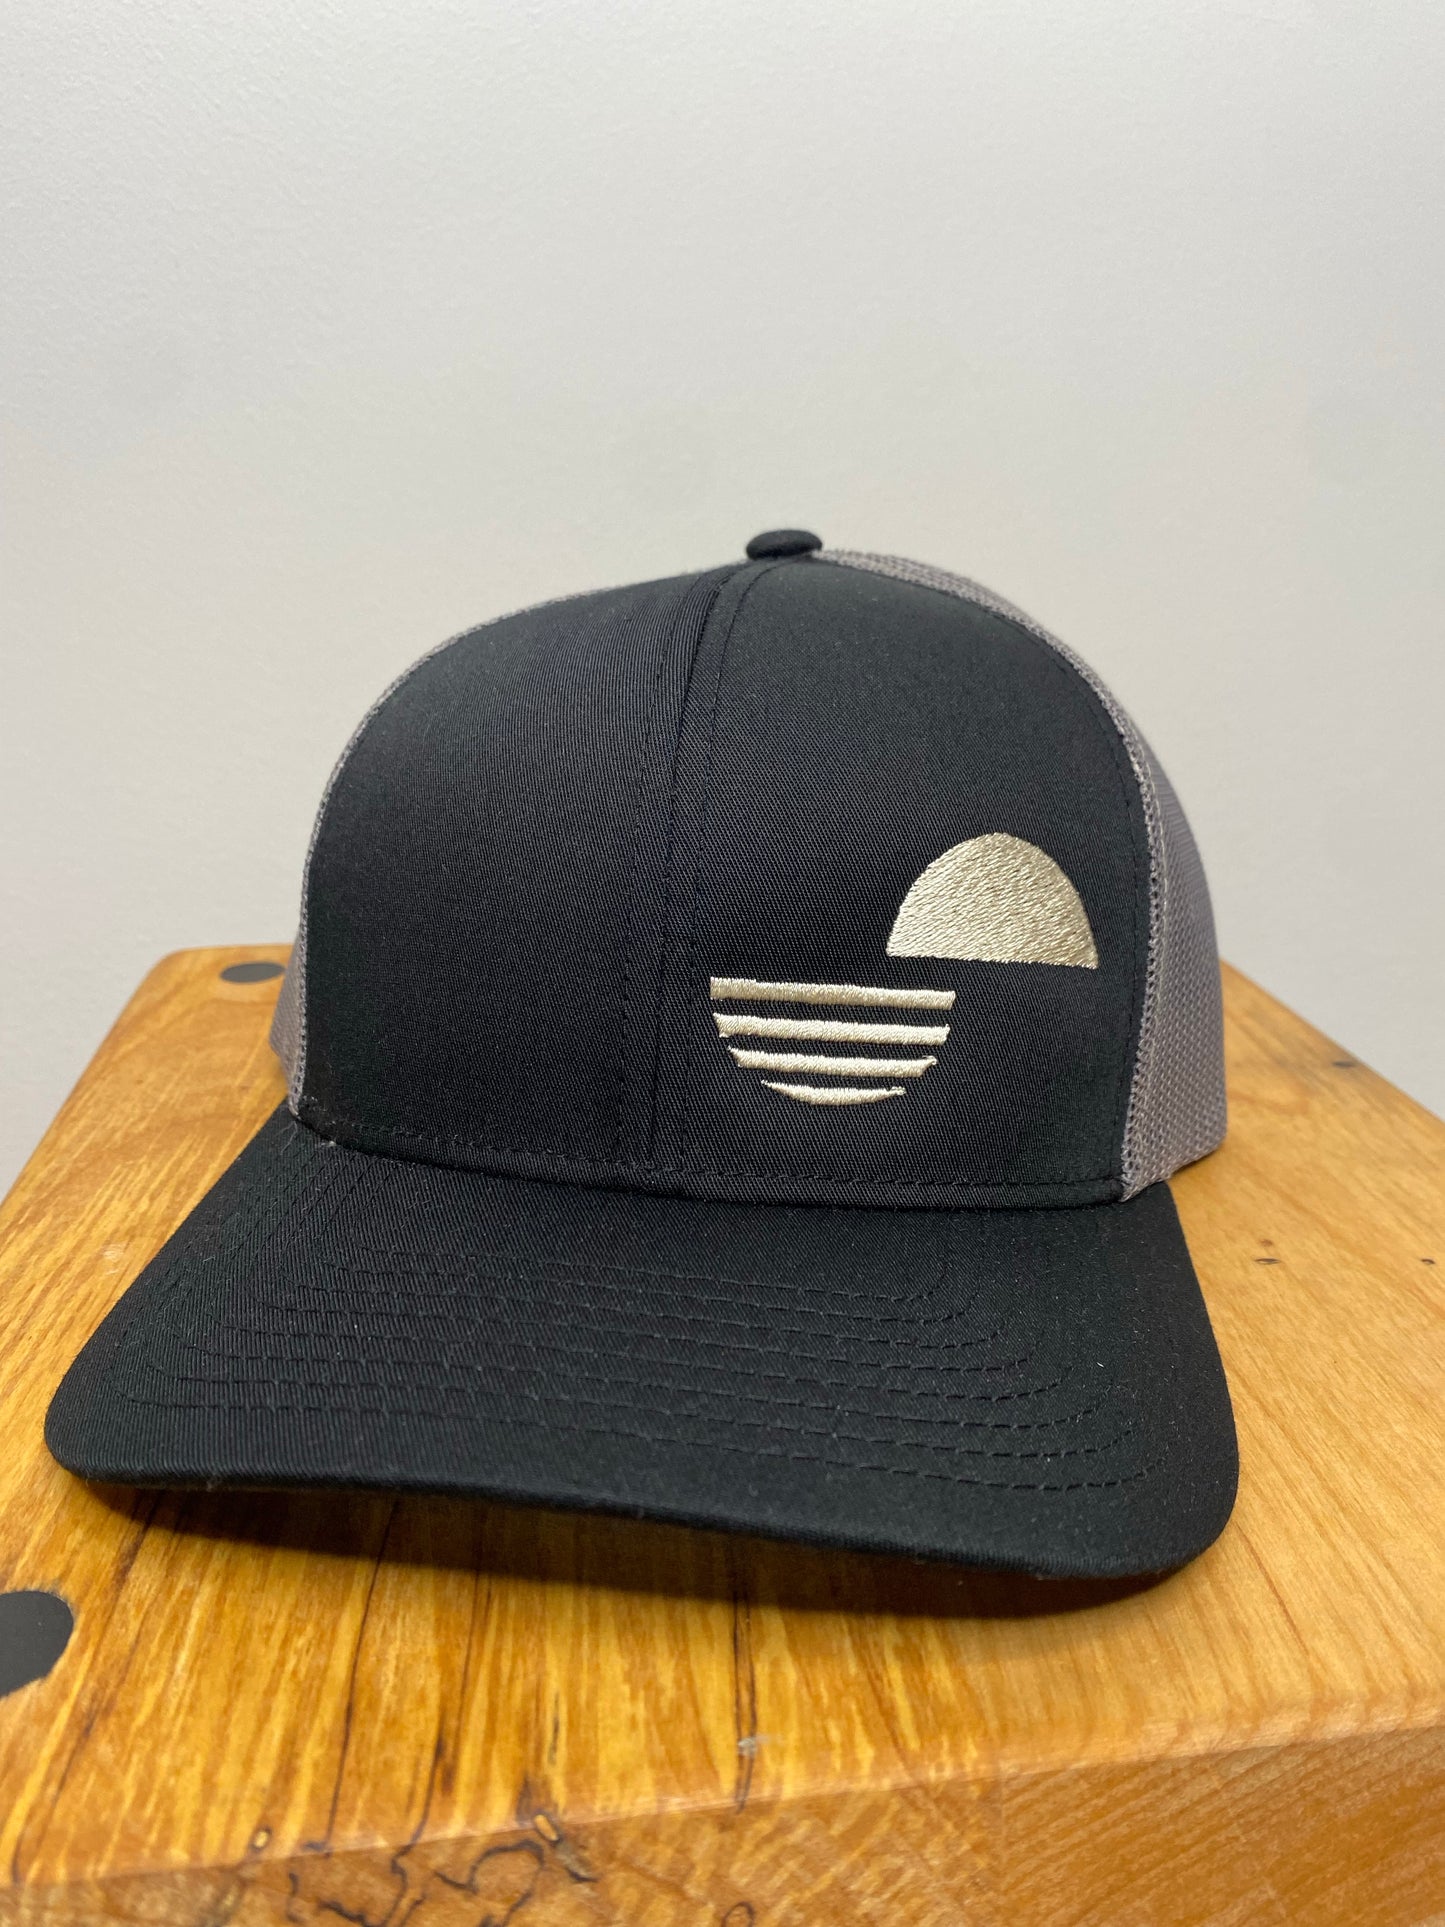 Trucker Hat Black on Charcoal